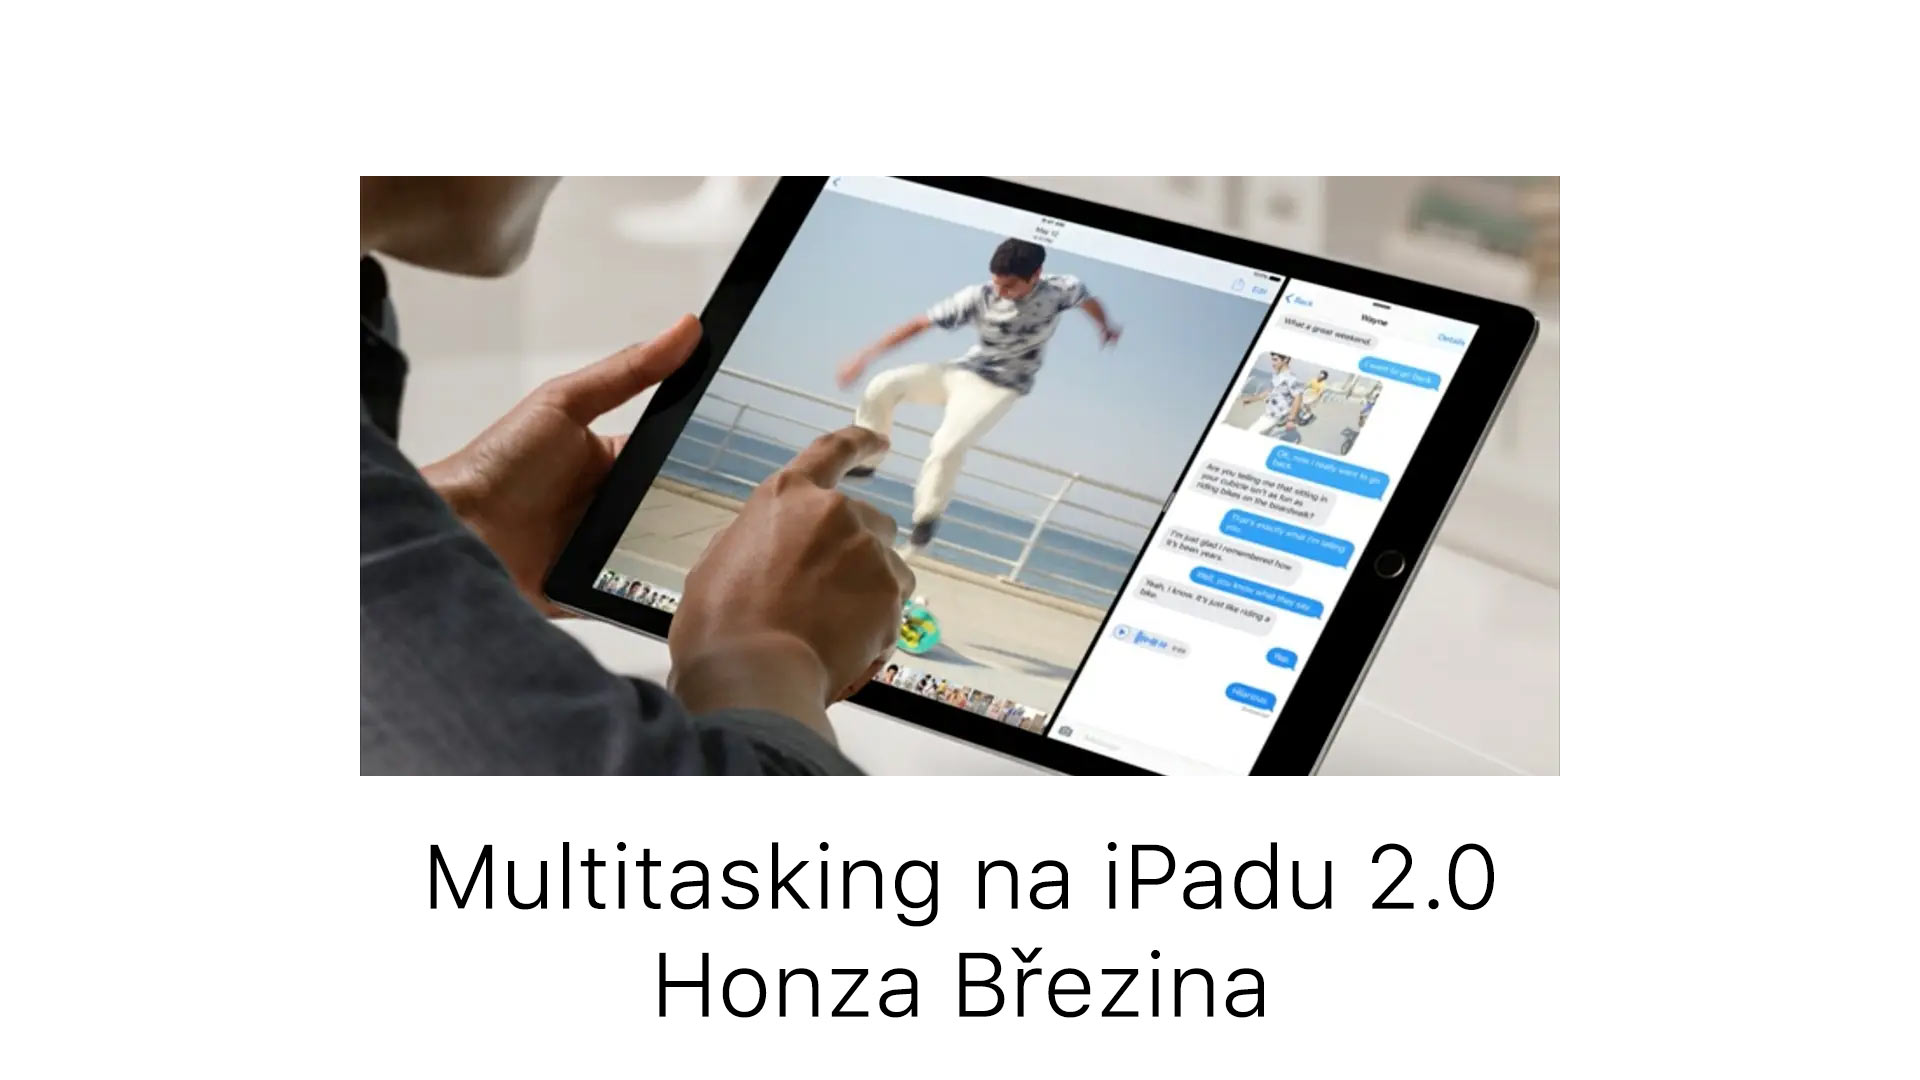 Multitasking na iPadu 2.0